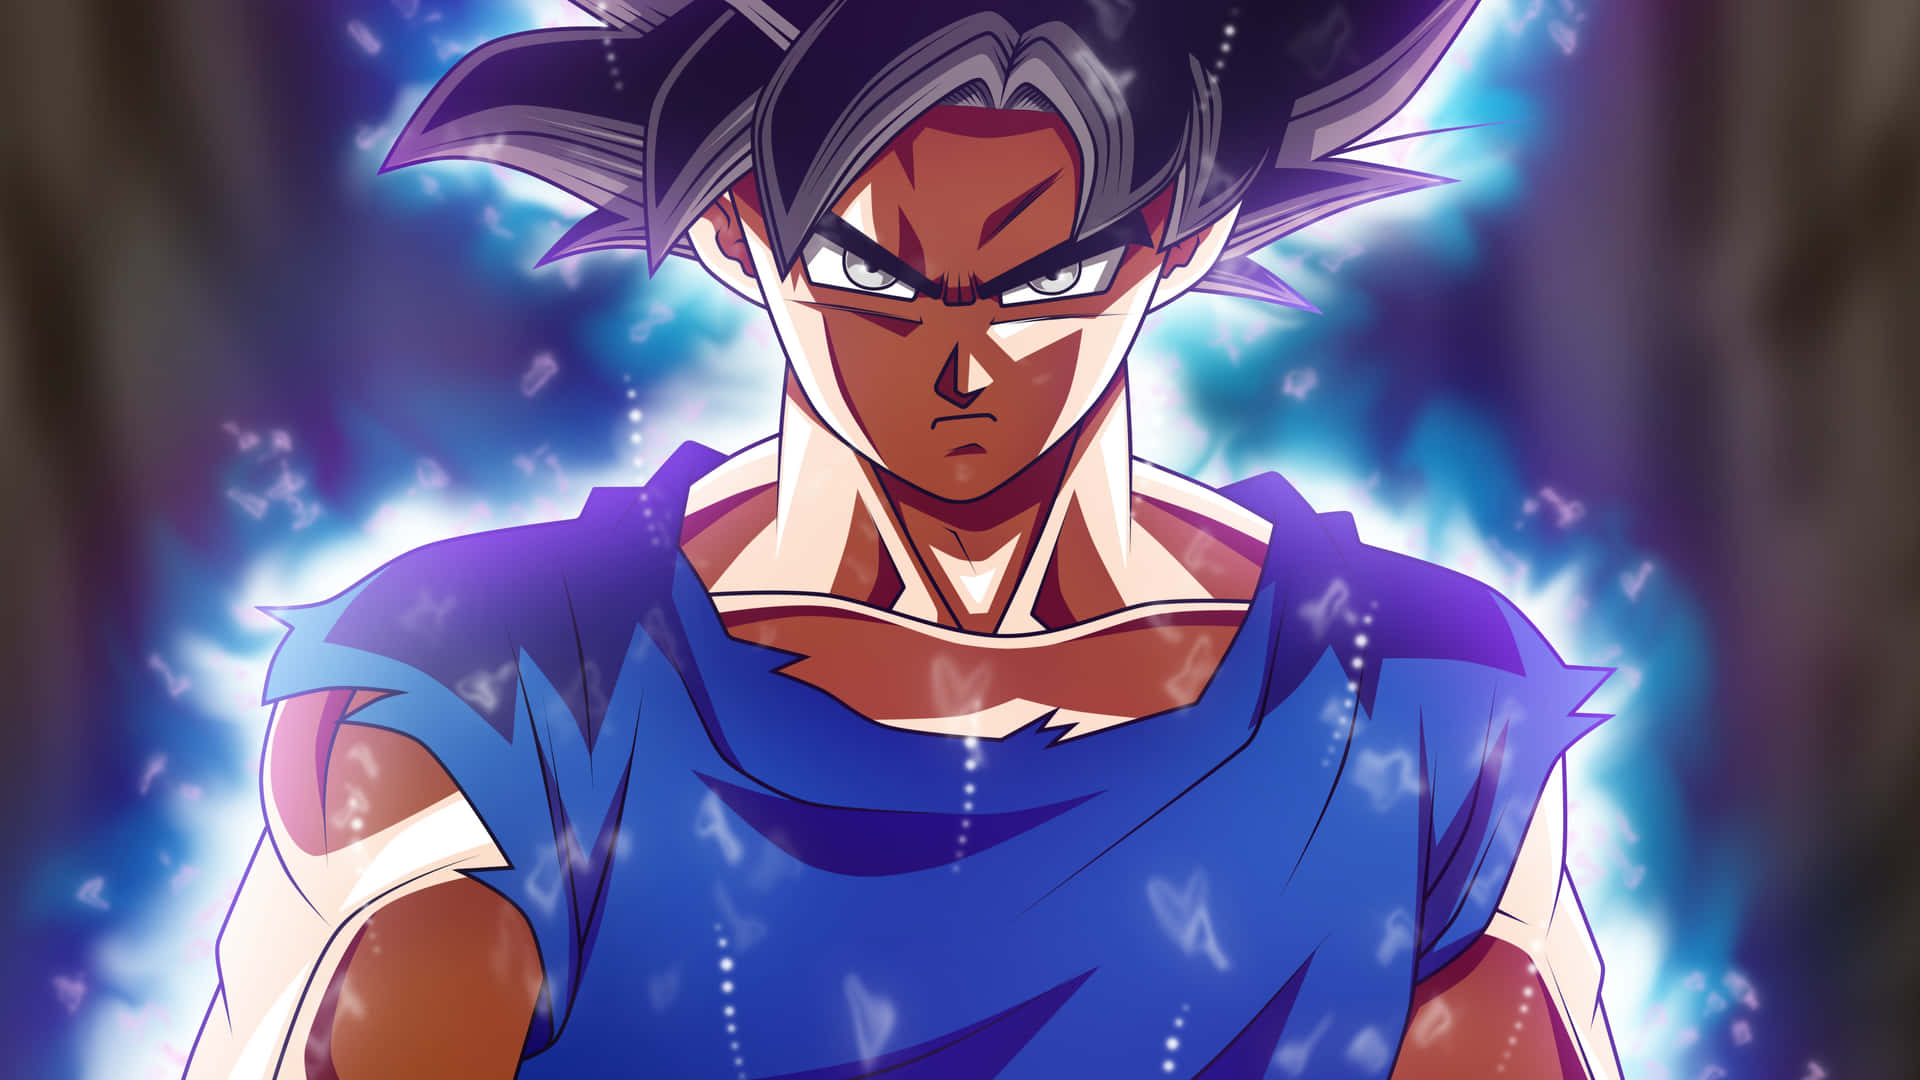 Fra Dragon Ball Super, lader Goku sit ultra instinkt Transformation los. Wallpaper